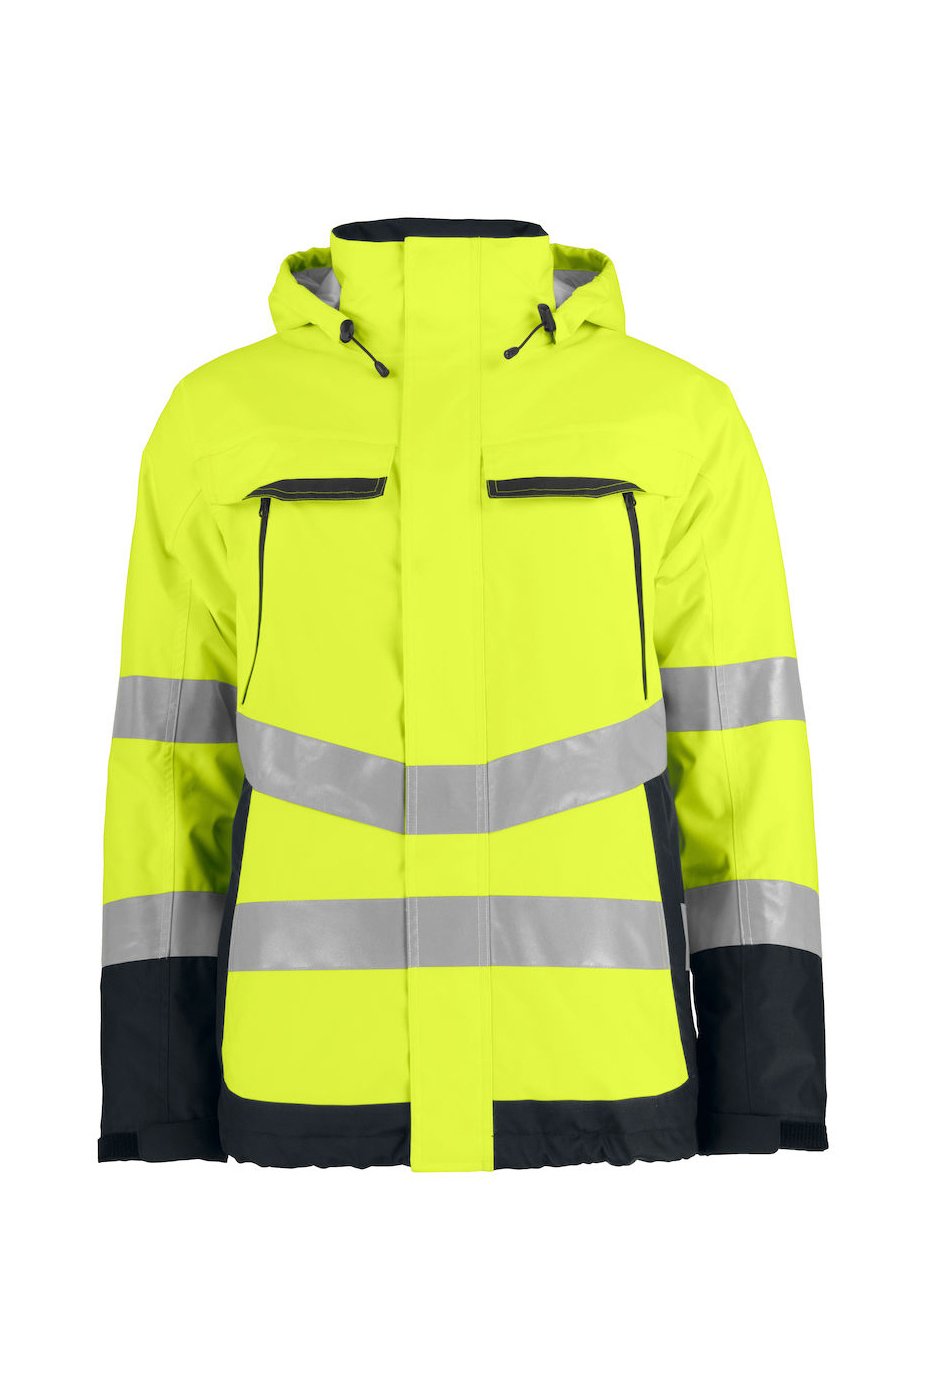 20471 Klasse Müller - Arbeitshose Workwear 1, EN ISO Warnschutz gelb/schwarz